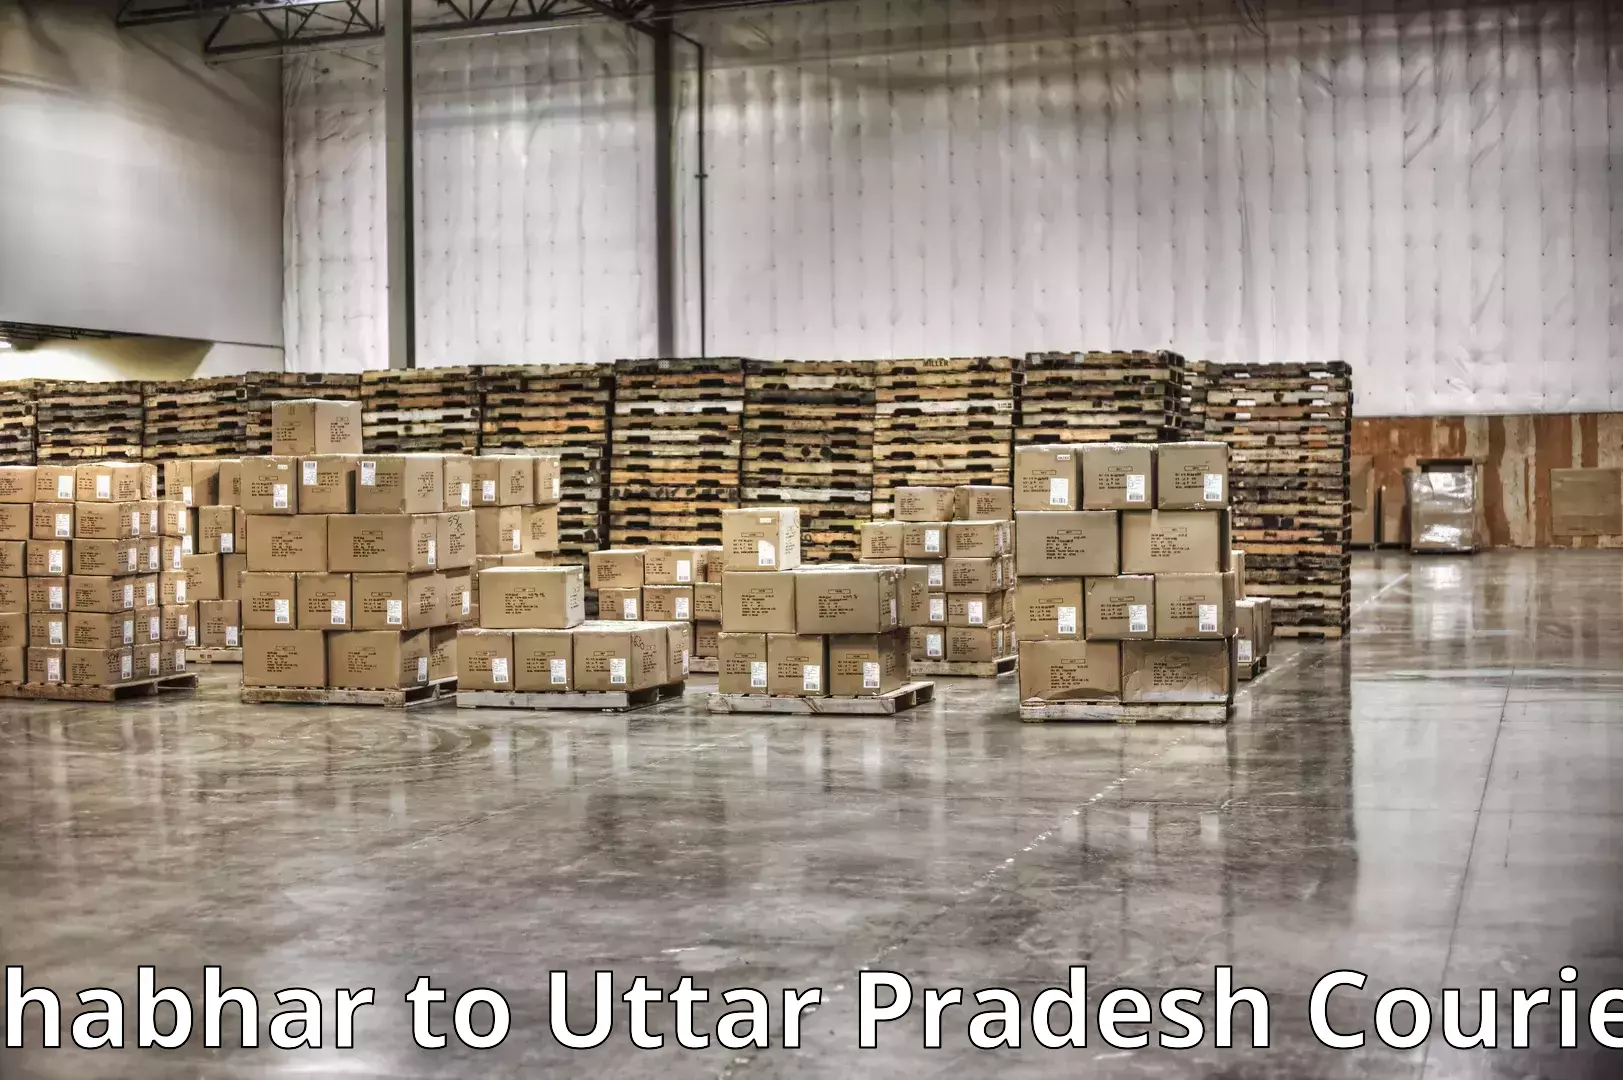 Professional moving company Bhabhar to Sahatwar